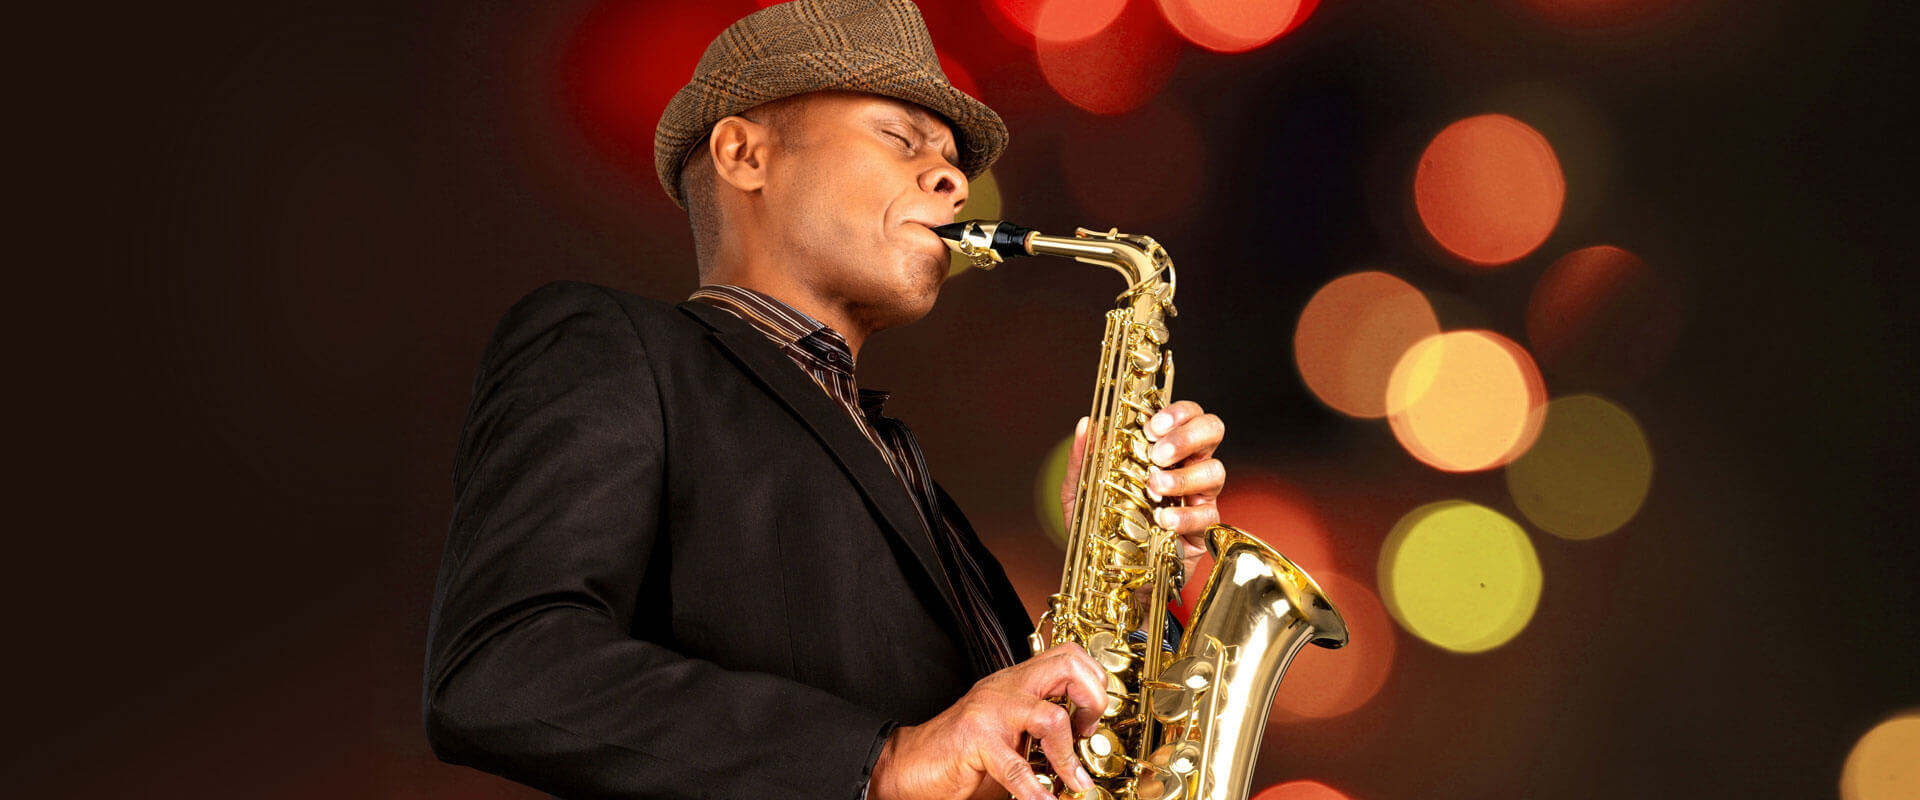 Saxophone Lessons Minneapolis, MN